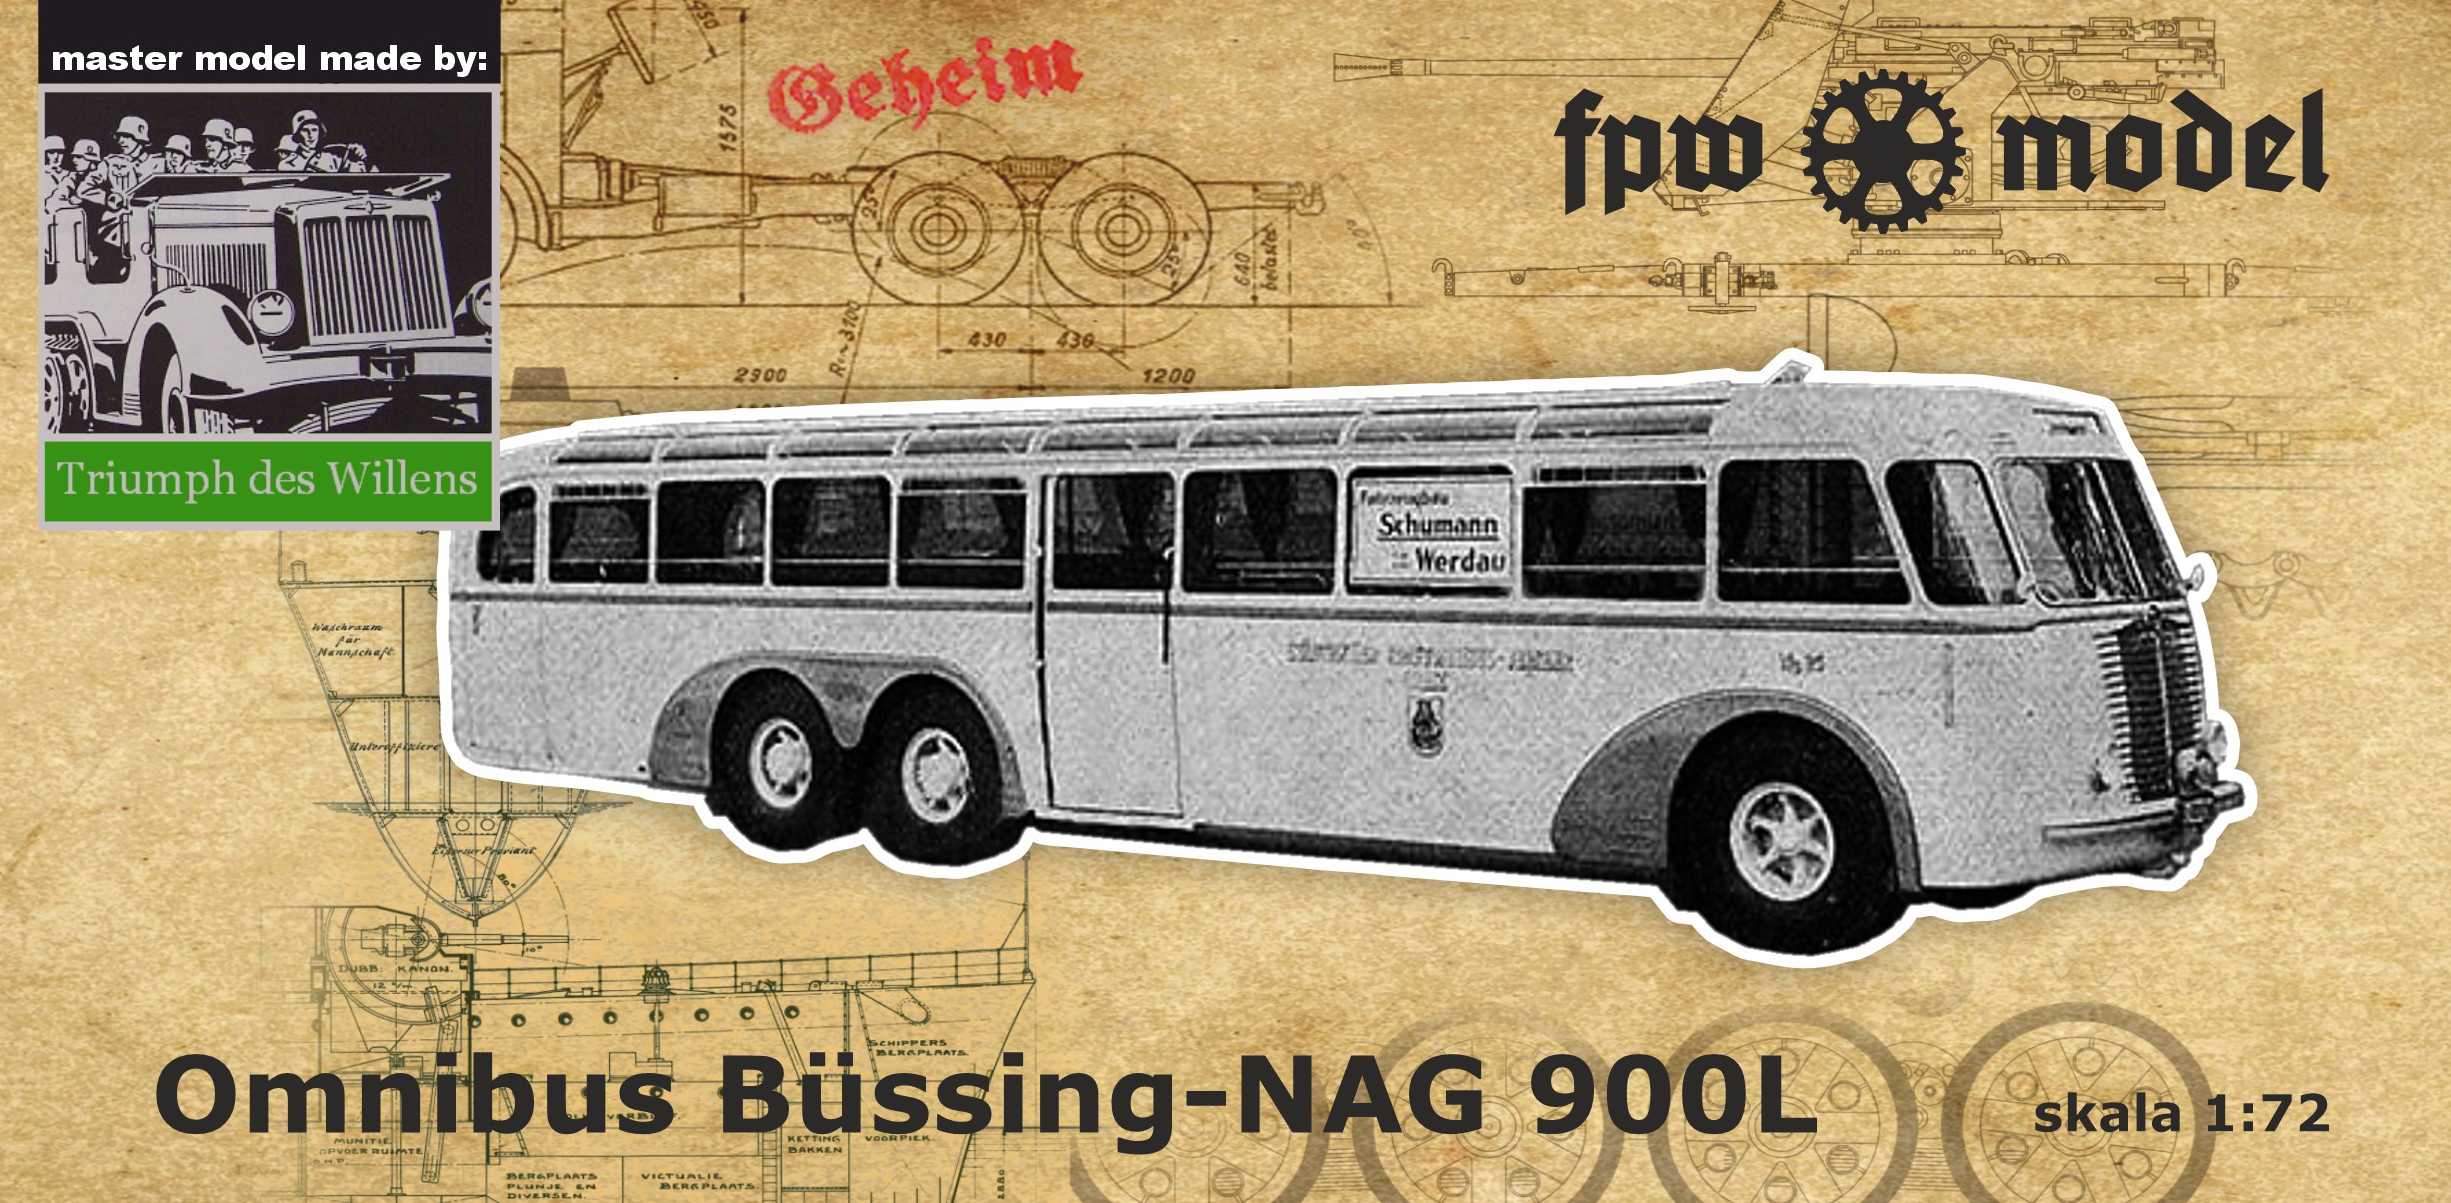 Bussing-NAG 900L omnibus - Click Image to Close